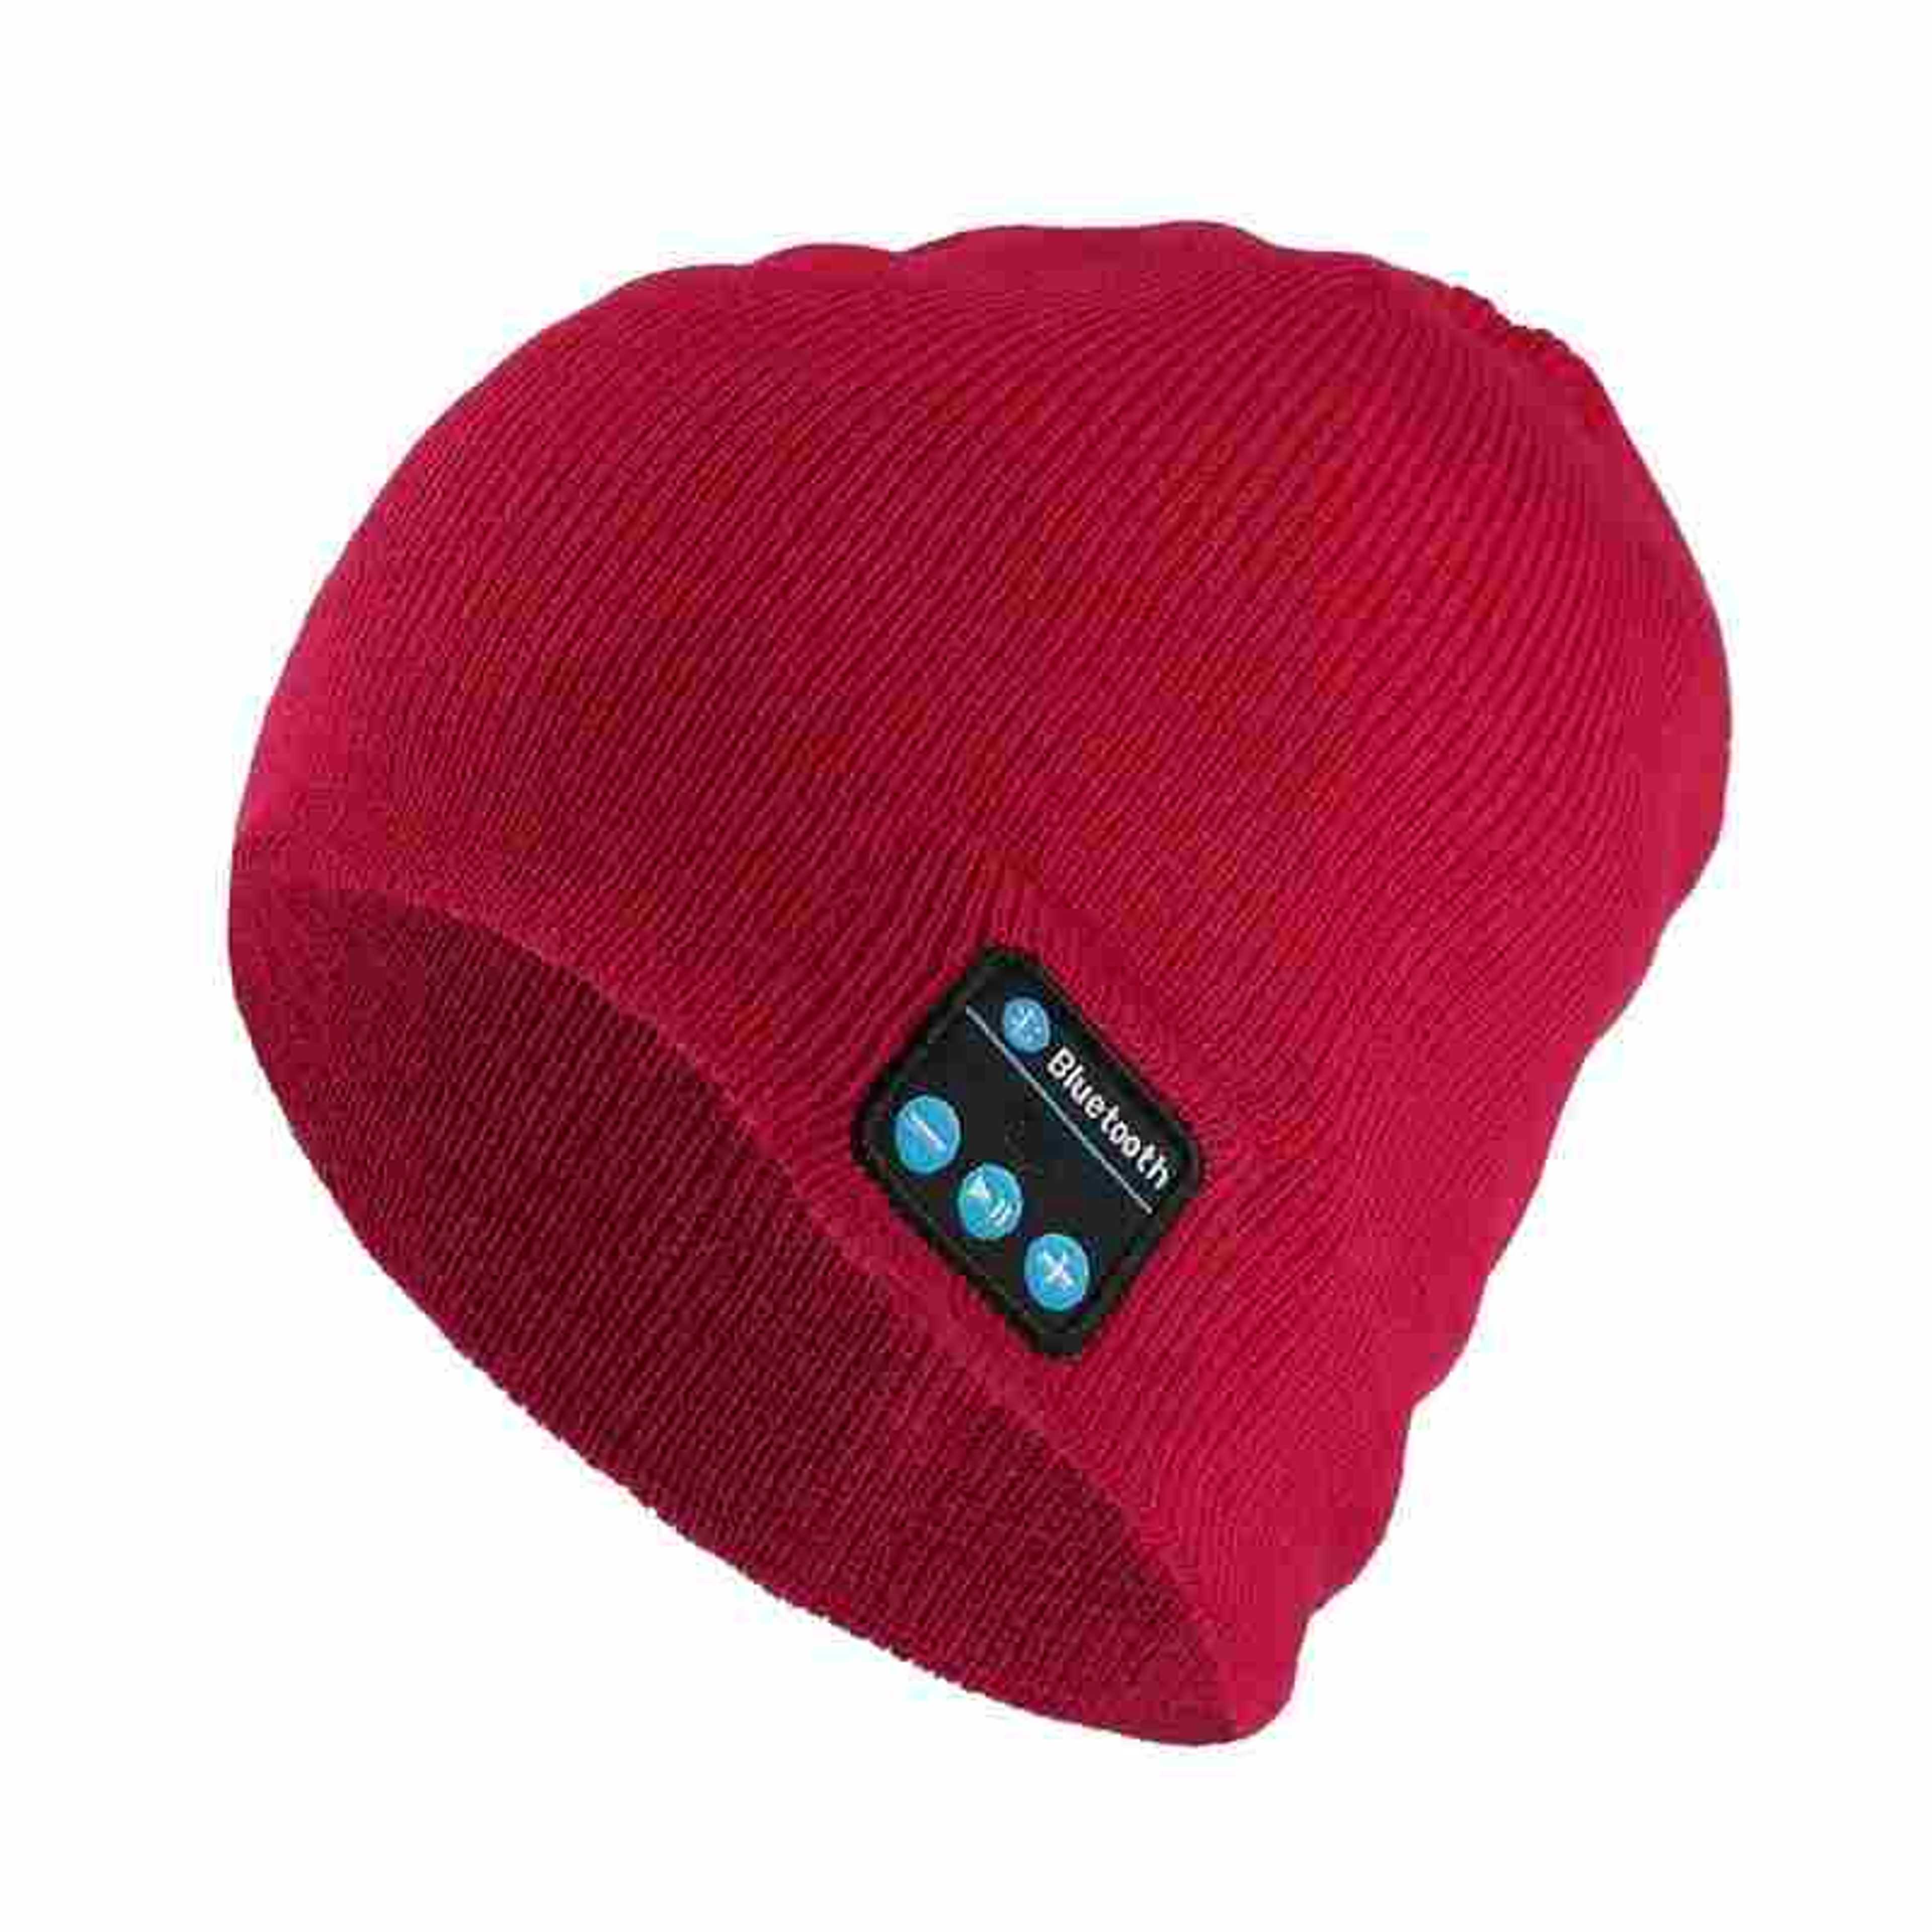 Wireless Bluetooth Music Hat Smart Headset Winter Cap With Speaker
